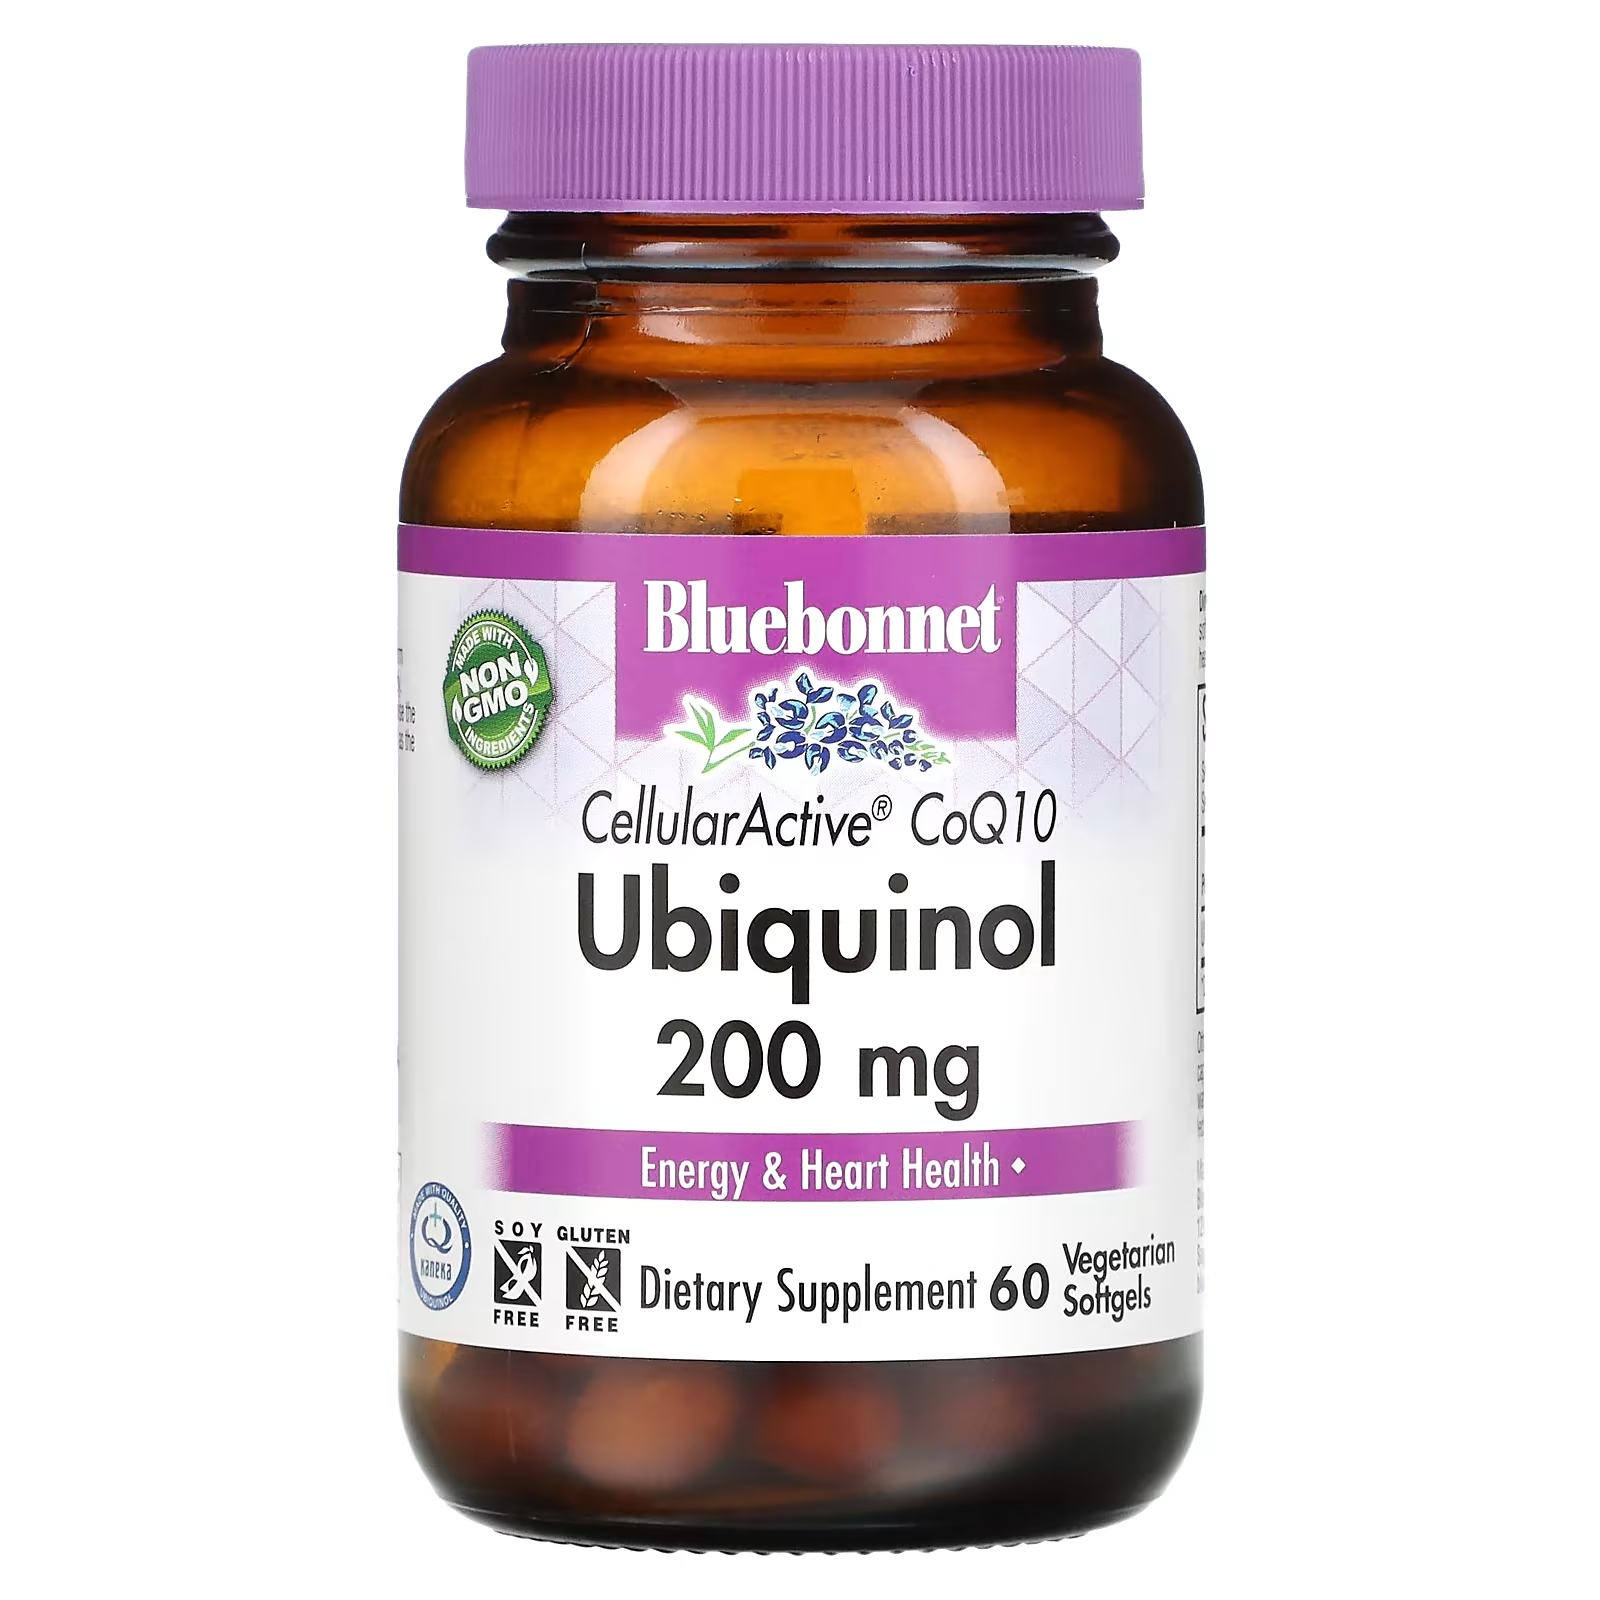 Bluebonnet Nutrition Убихинол CellullarActive CoQ10 200 мг, 60 растительных капсул убихинол cellullaractive coq10 200 мг 60 капсул bluebonnet nutrition